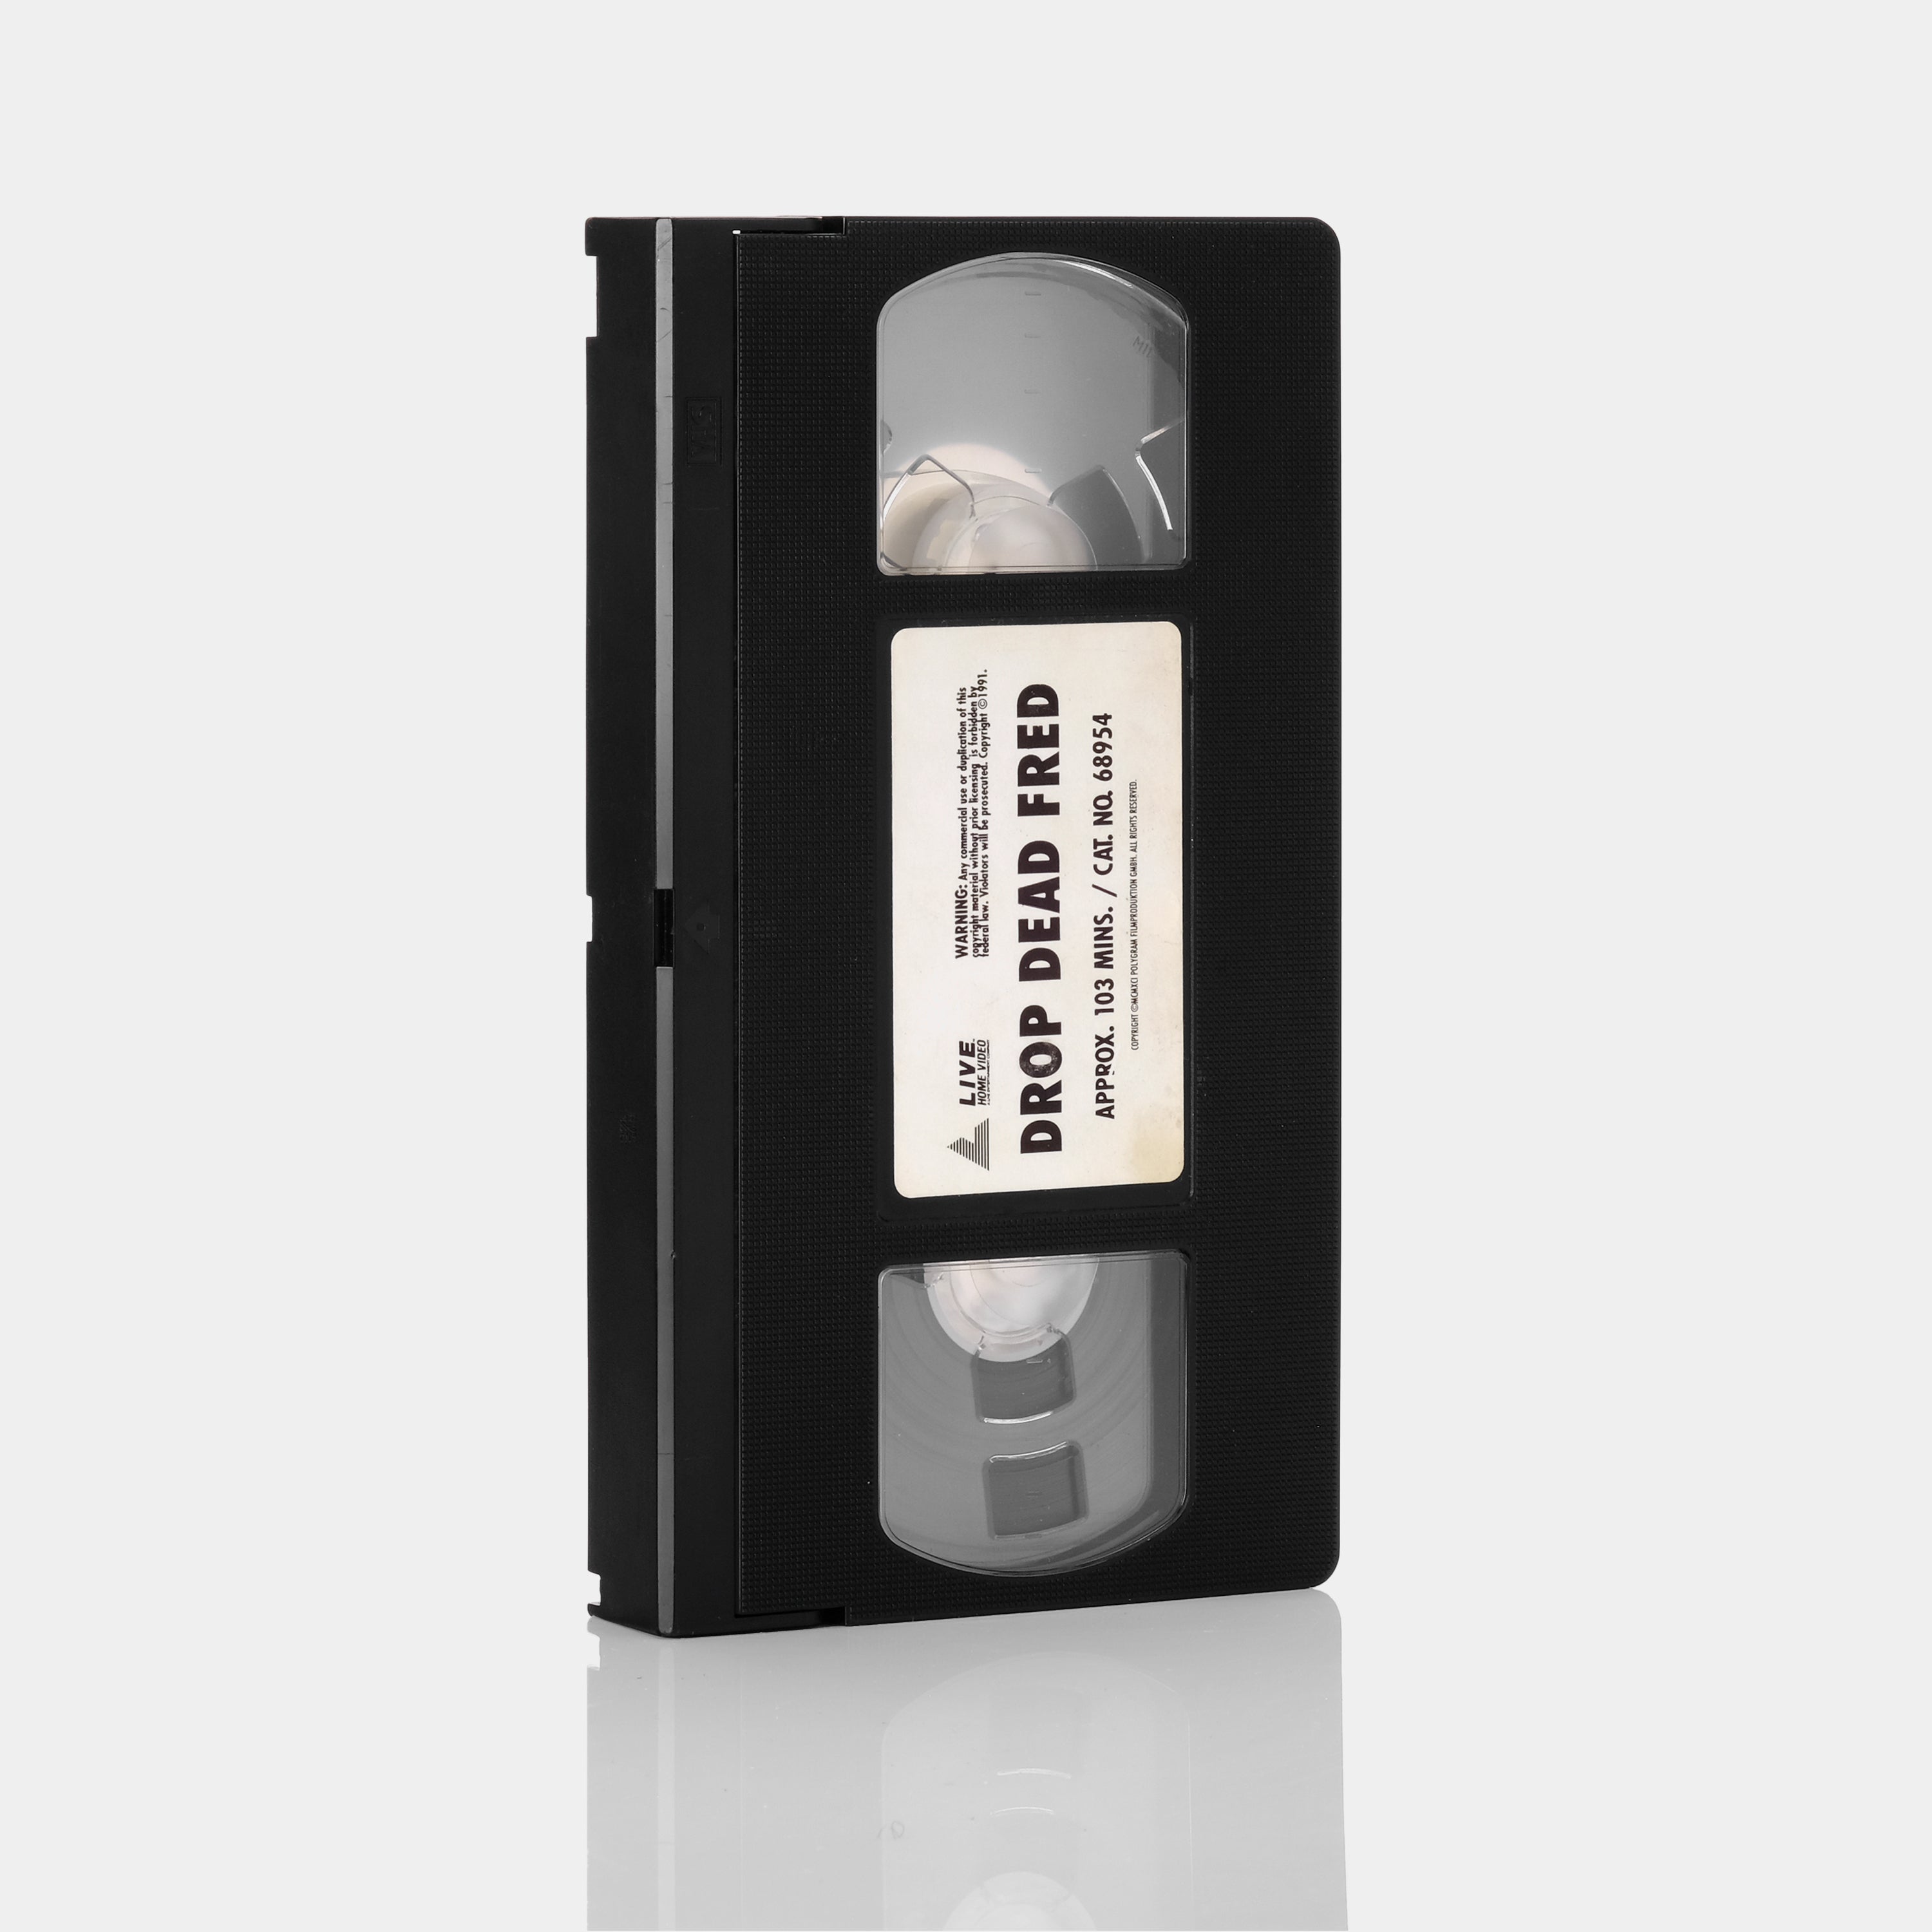 Drop Dead Fred VHS Tape